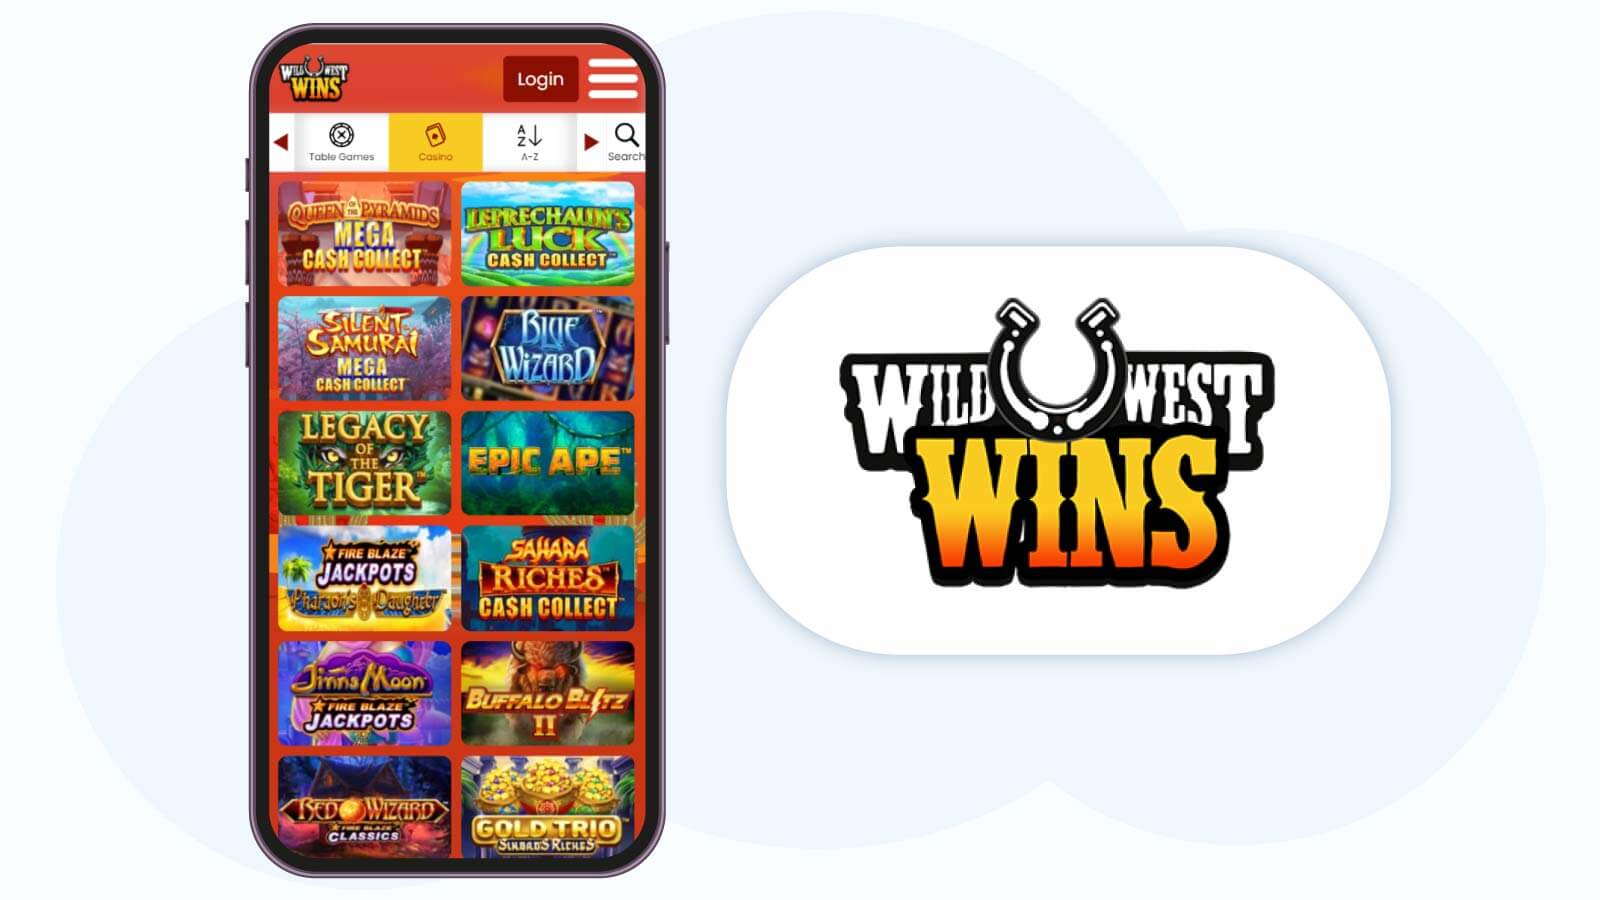 Wild West Wins Casino Top Free Spins No Deposit Mobile Verification UK Casino by Jumpman